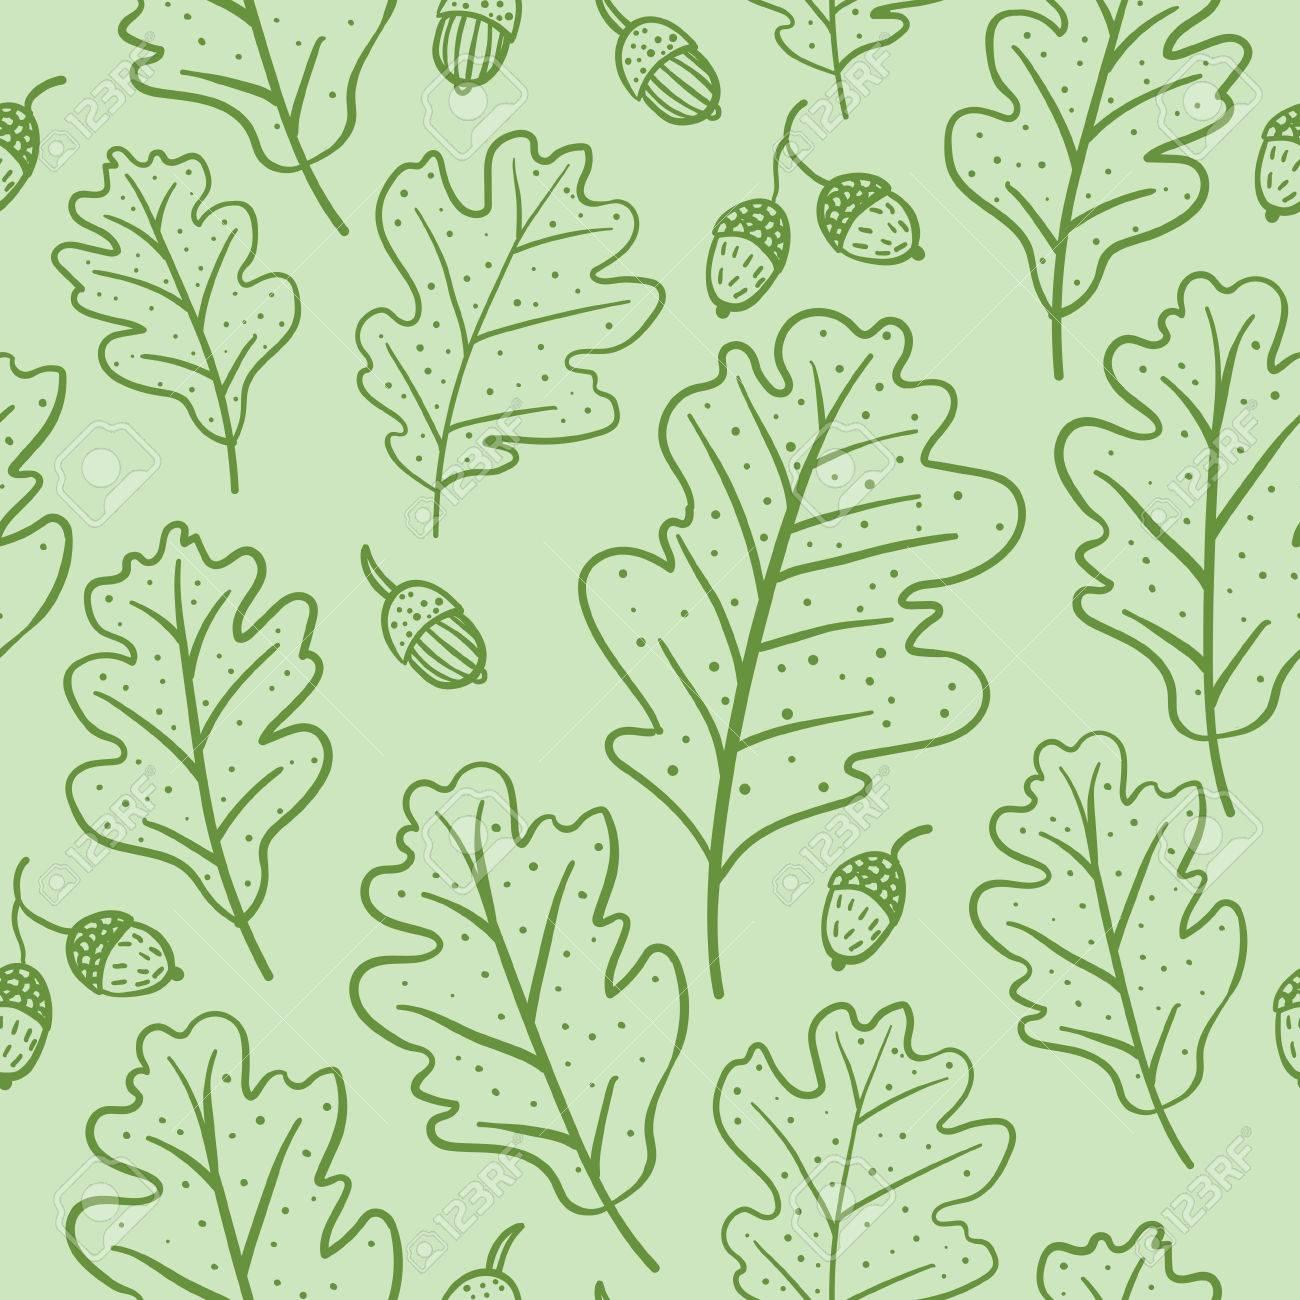 Oak Leaves Wallpapers - Wallpaper Cave